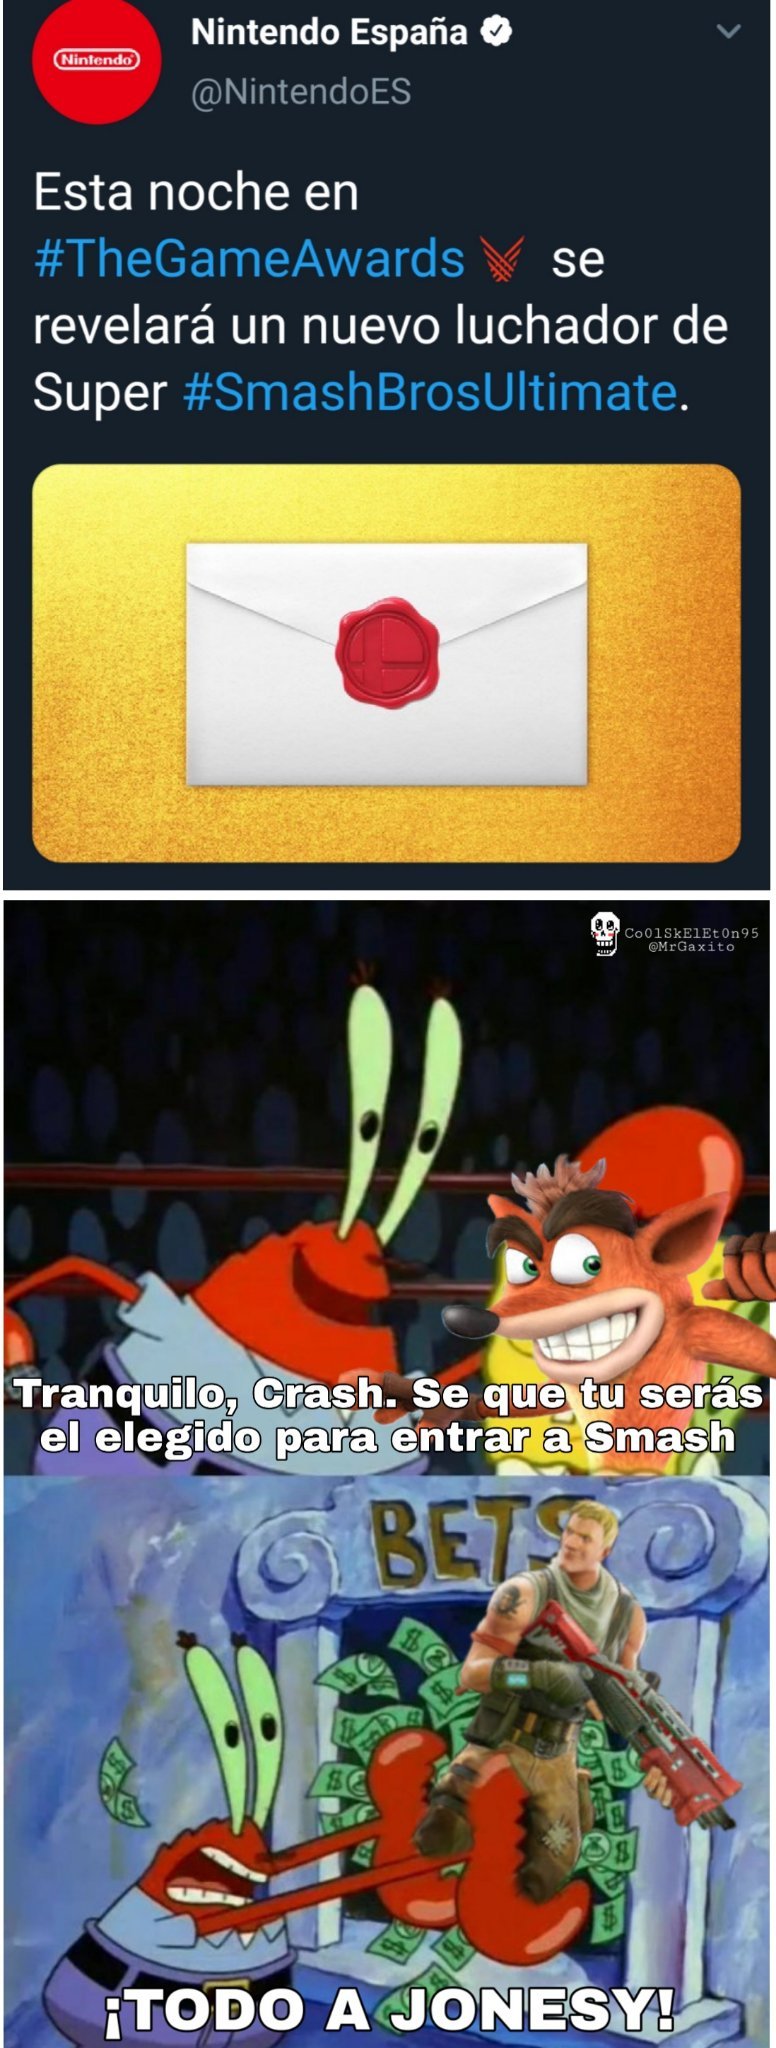 Me gusta mas Fortnite que Crash Bandicoot pero el que se lo merece mas es Crash - meme